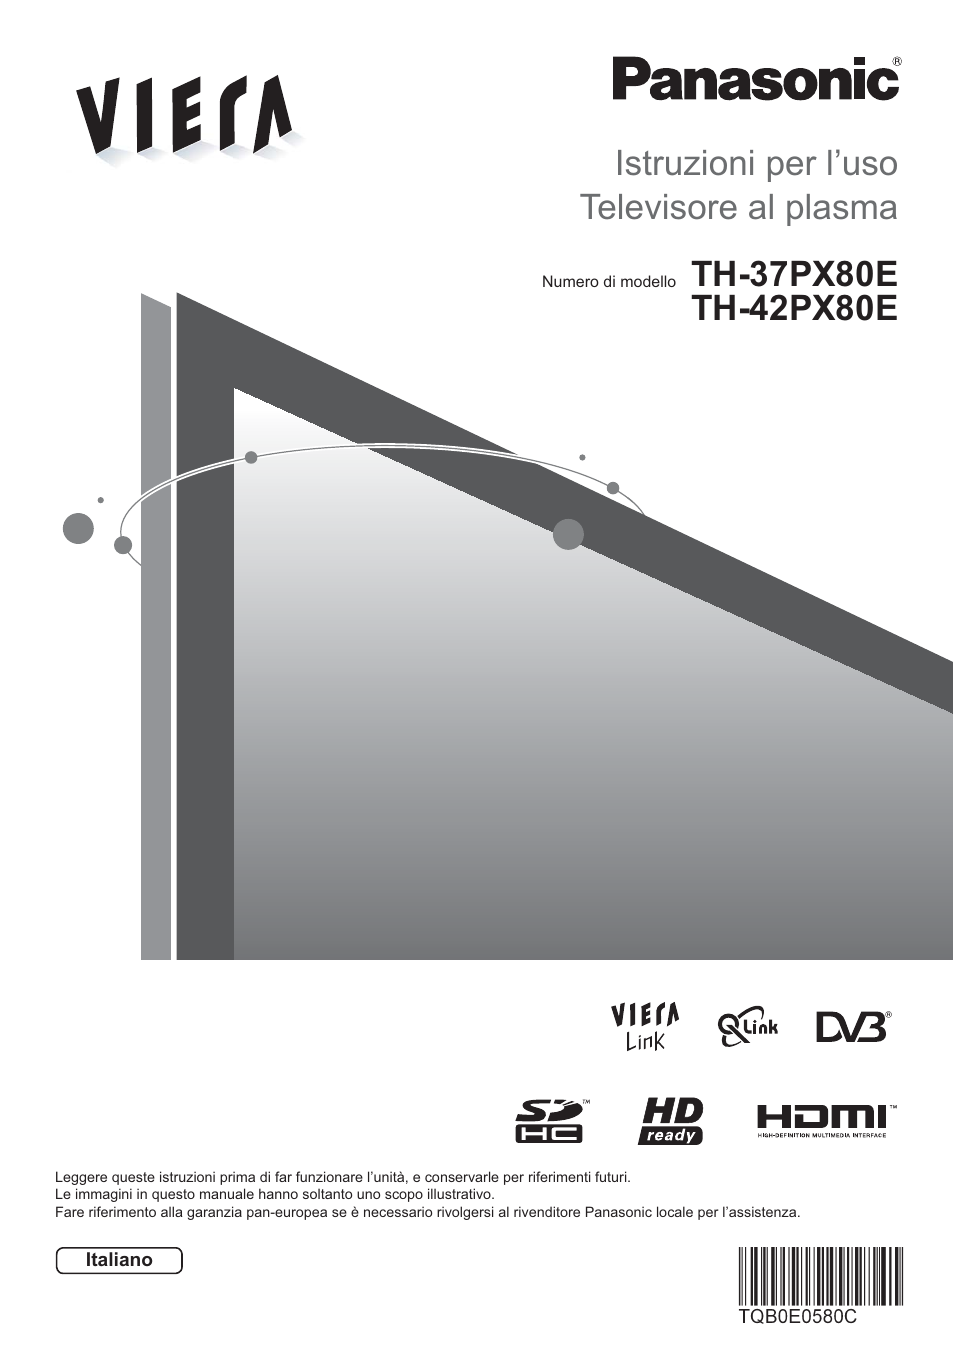 Panasonic TH37PX80E Manuale d'uso | Pagine: 52